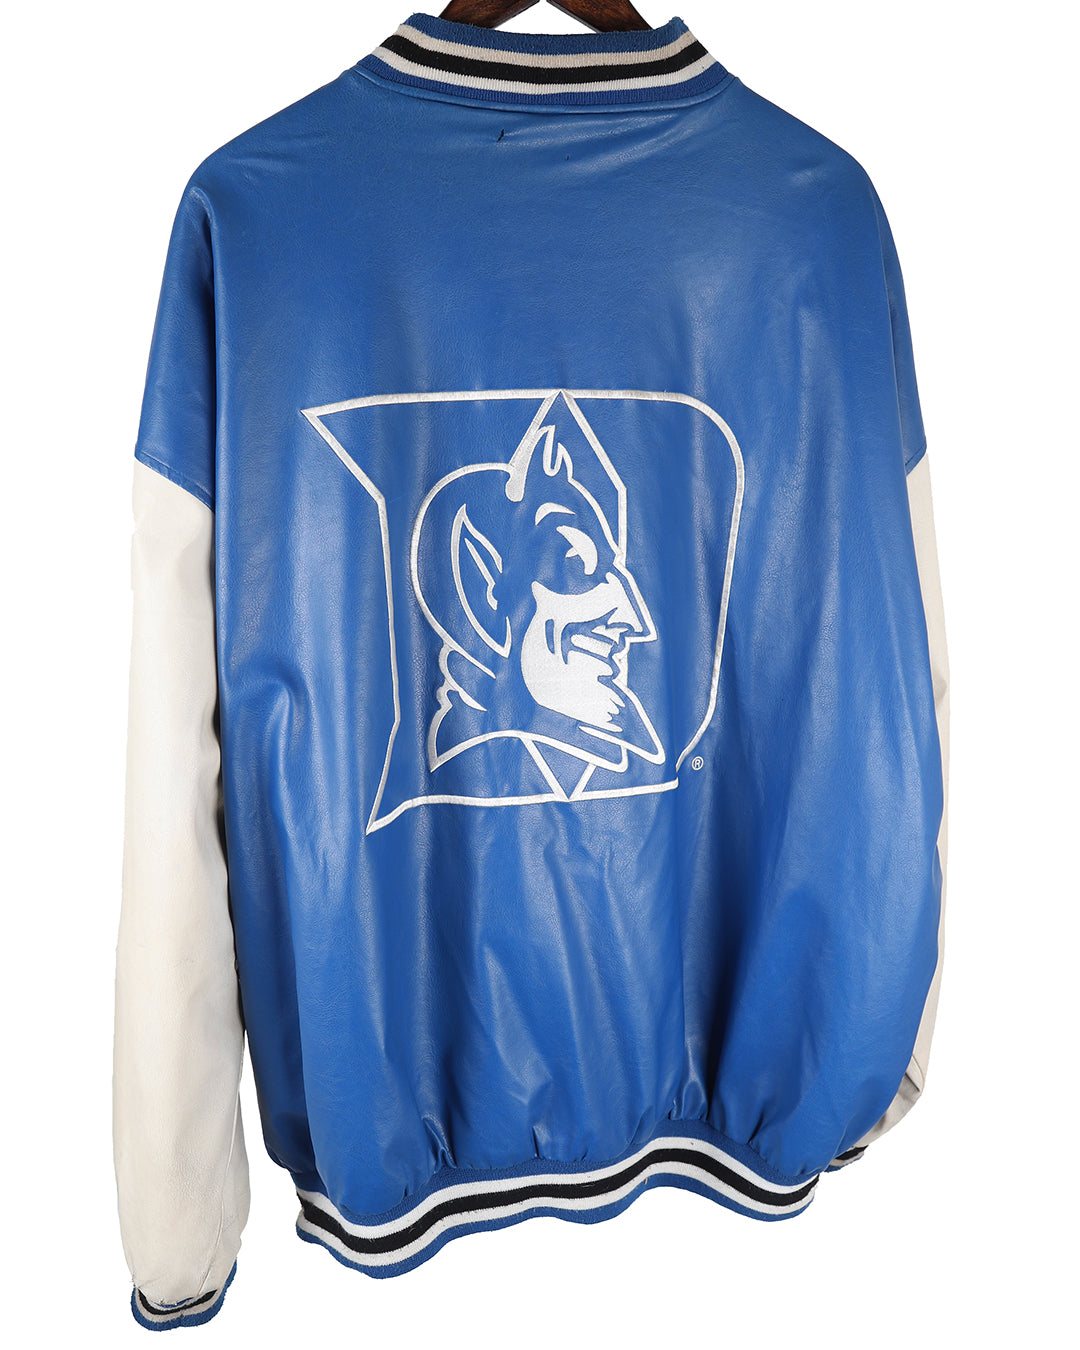 Duke University Letterman Jacket